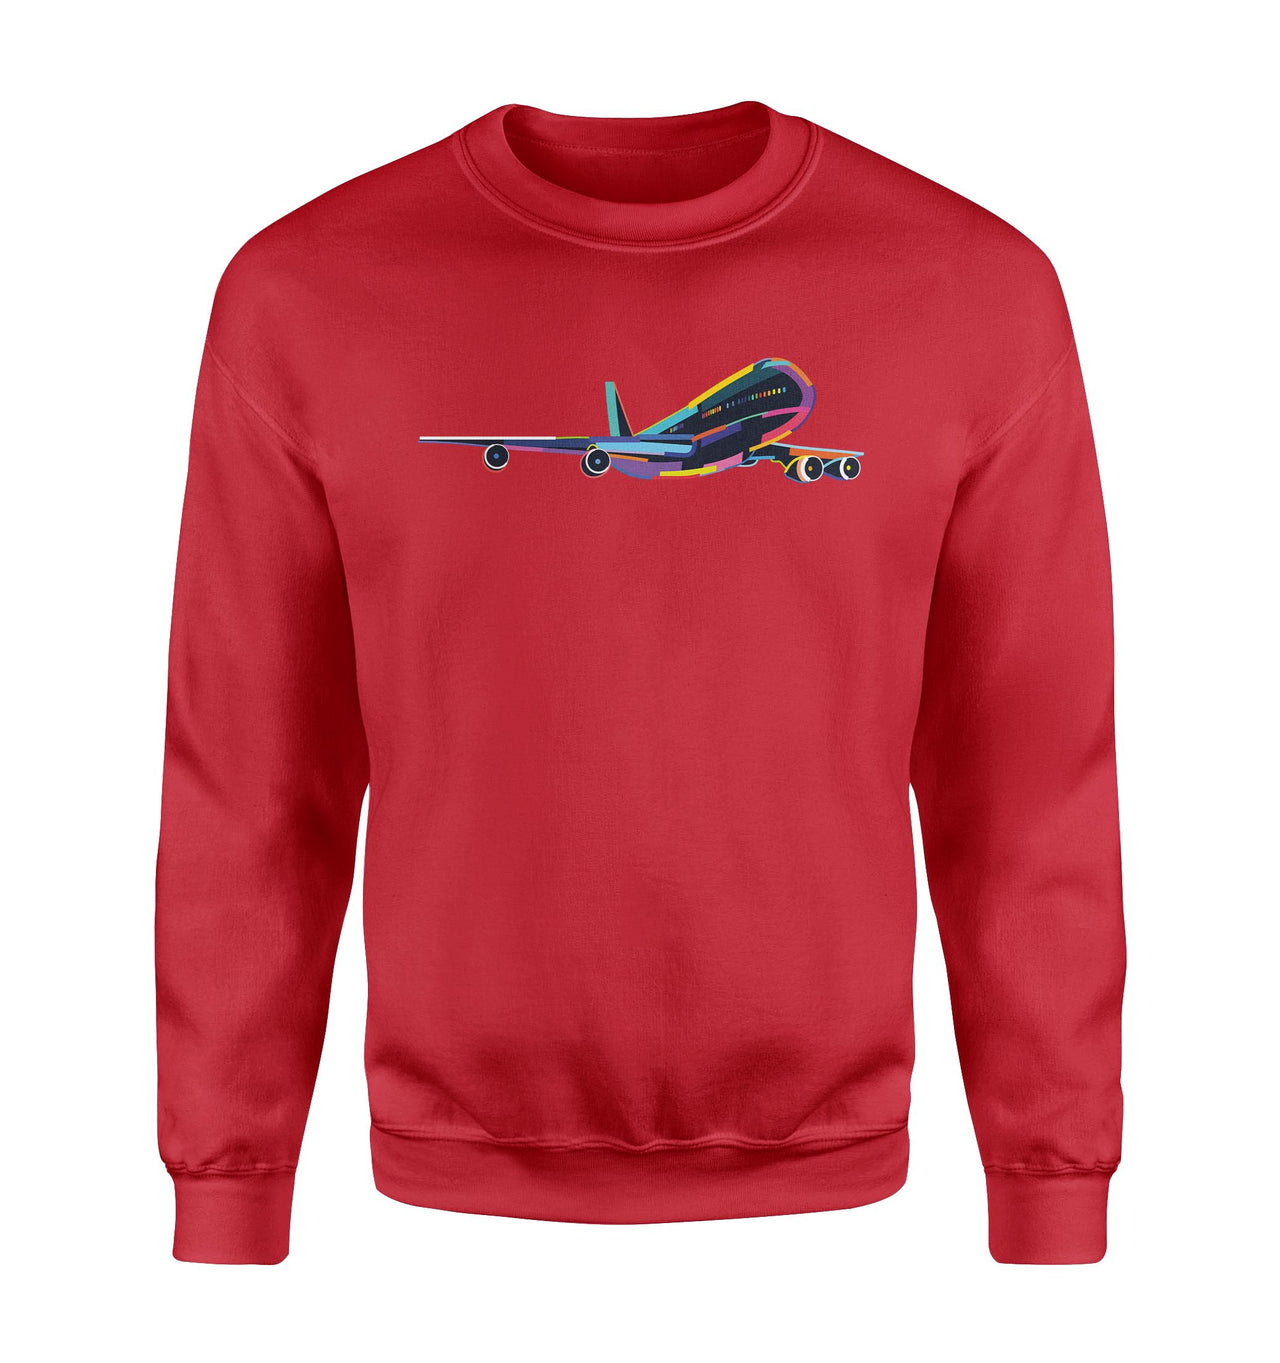 Multicolor Airplane Designed Sweatshirts